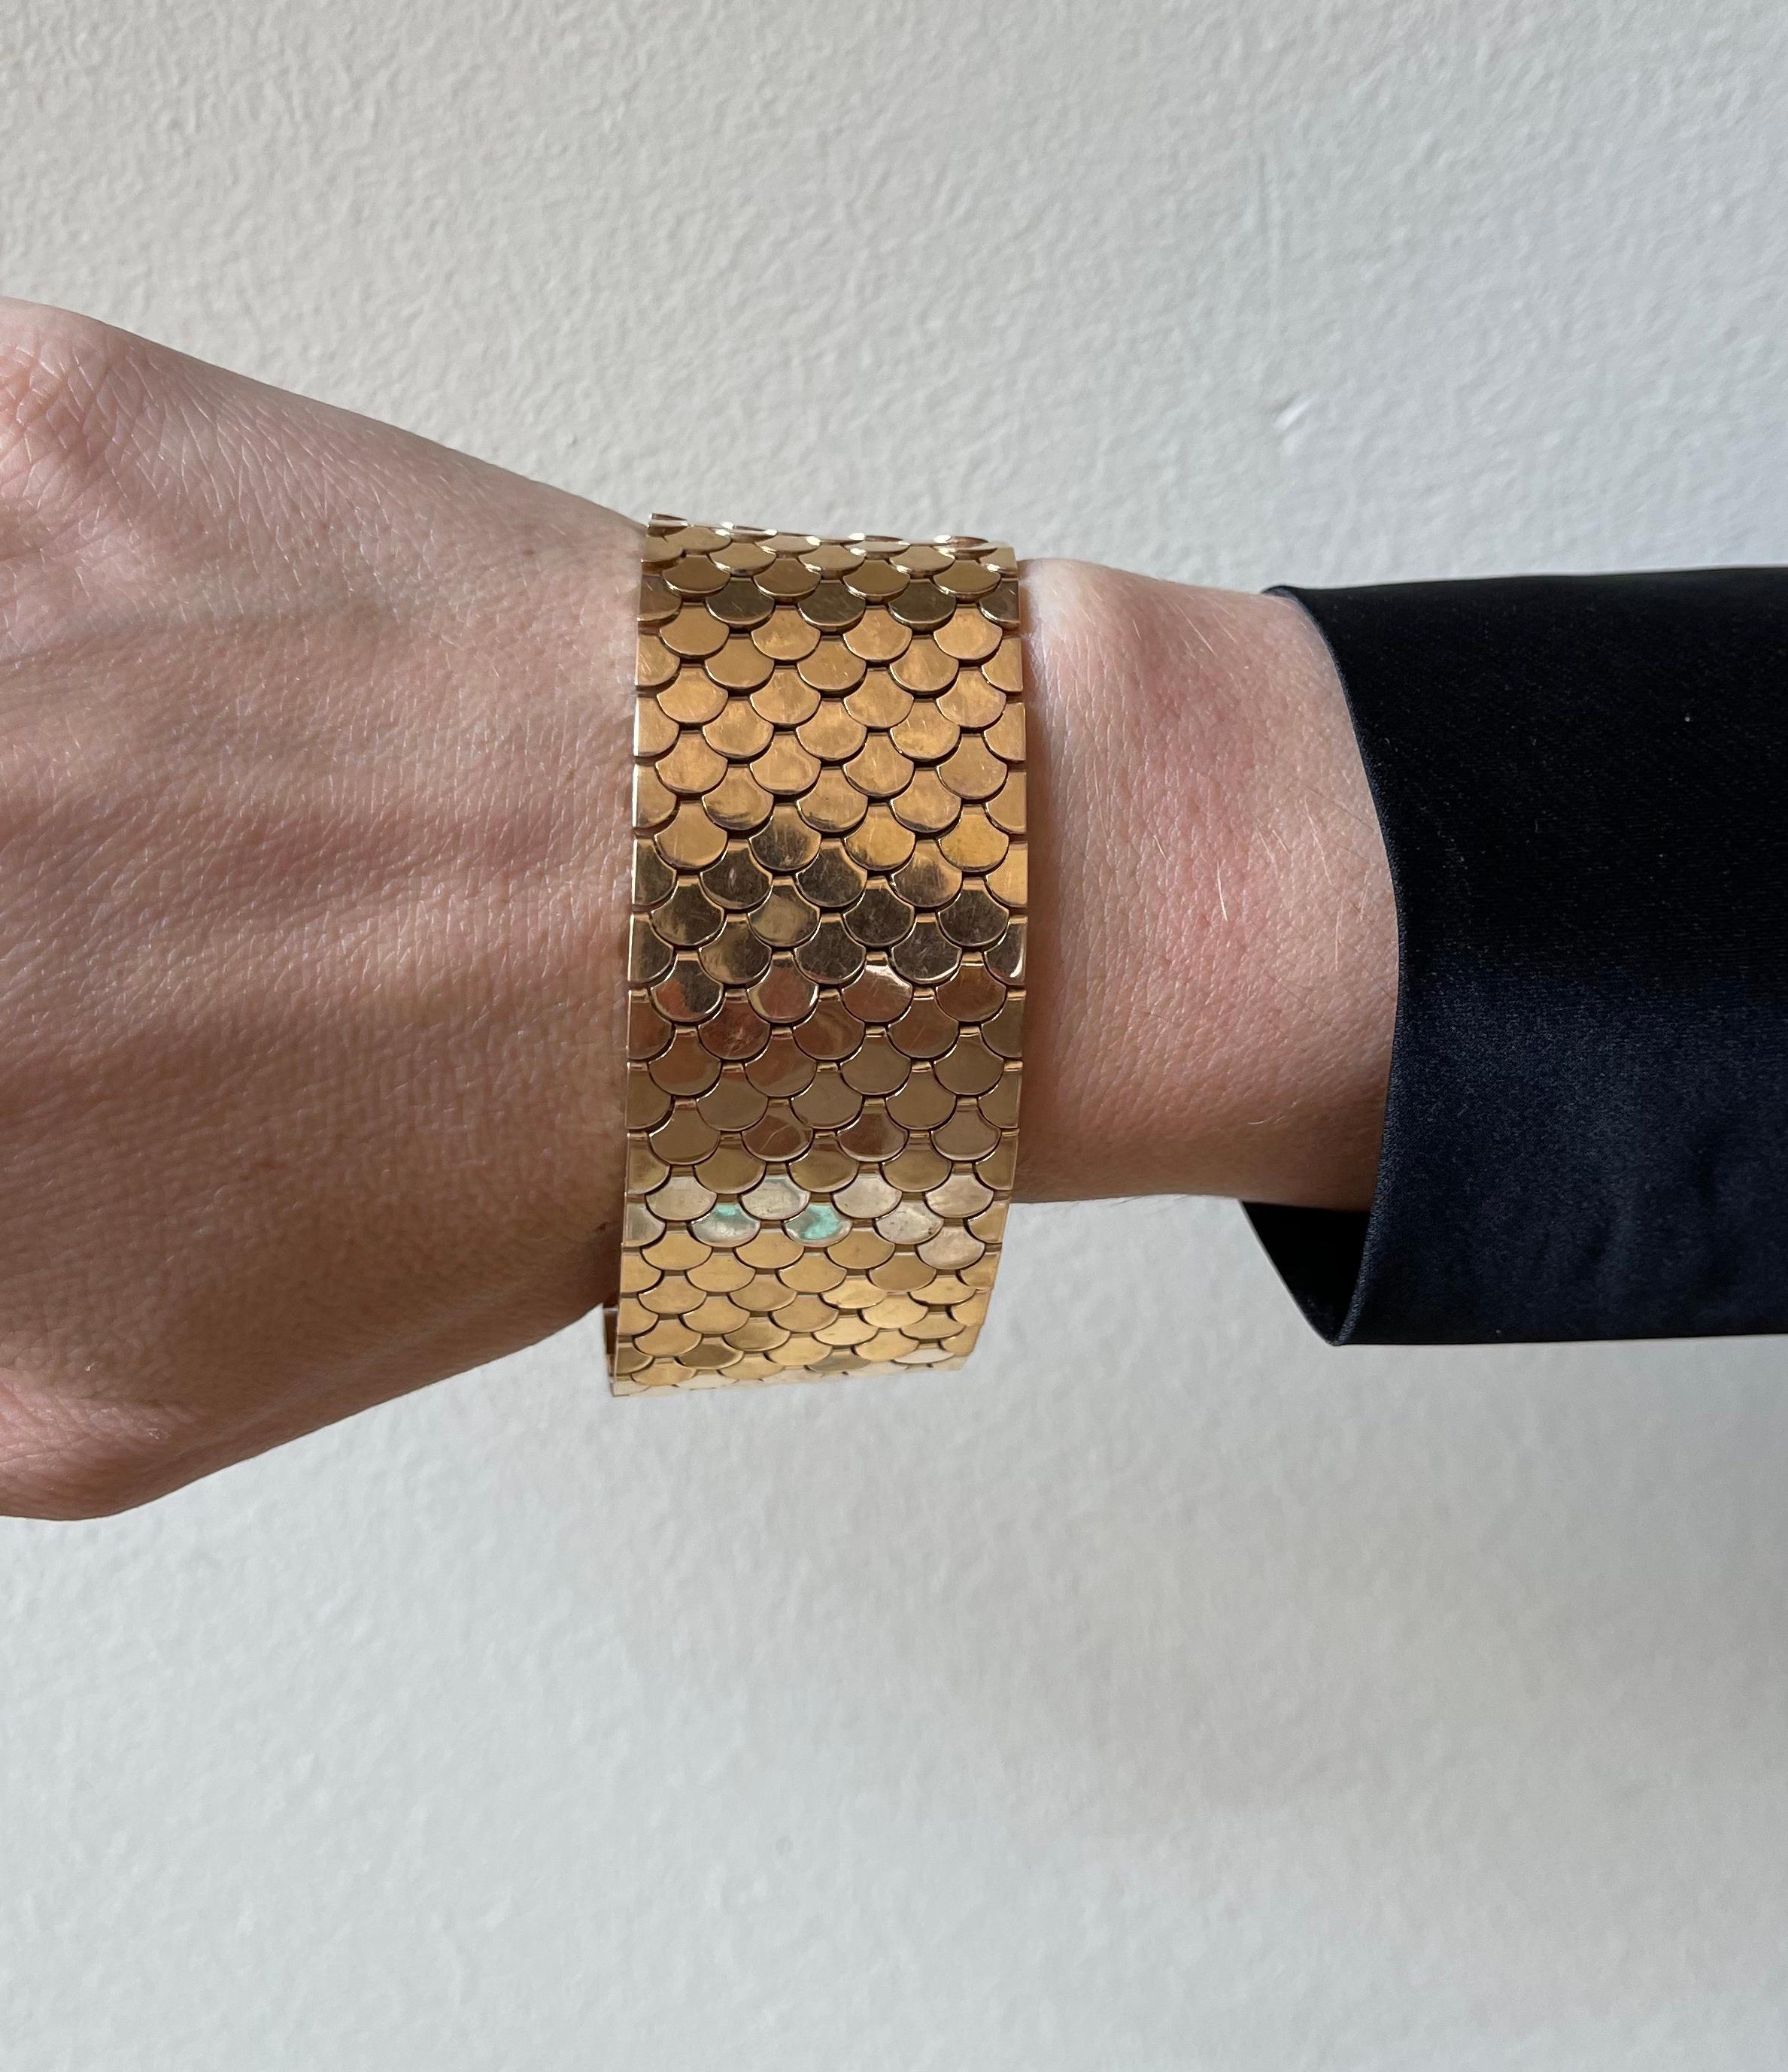 Gorgeous mid-century Retro 18k gold bracelet, featuring fish scale design. The bracelet is 7.5